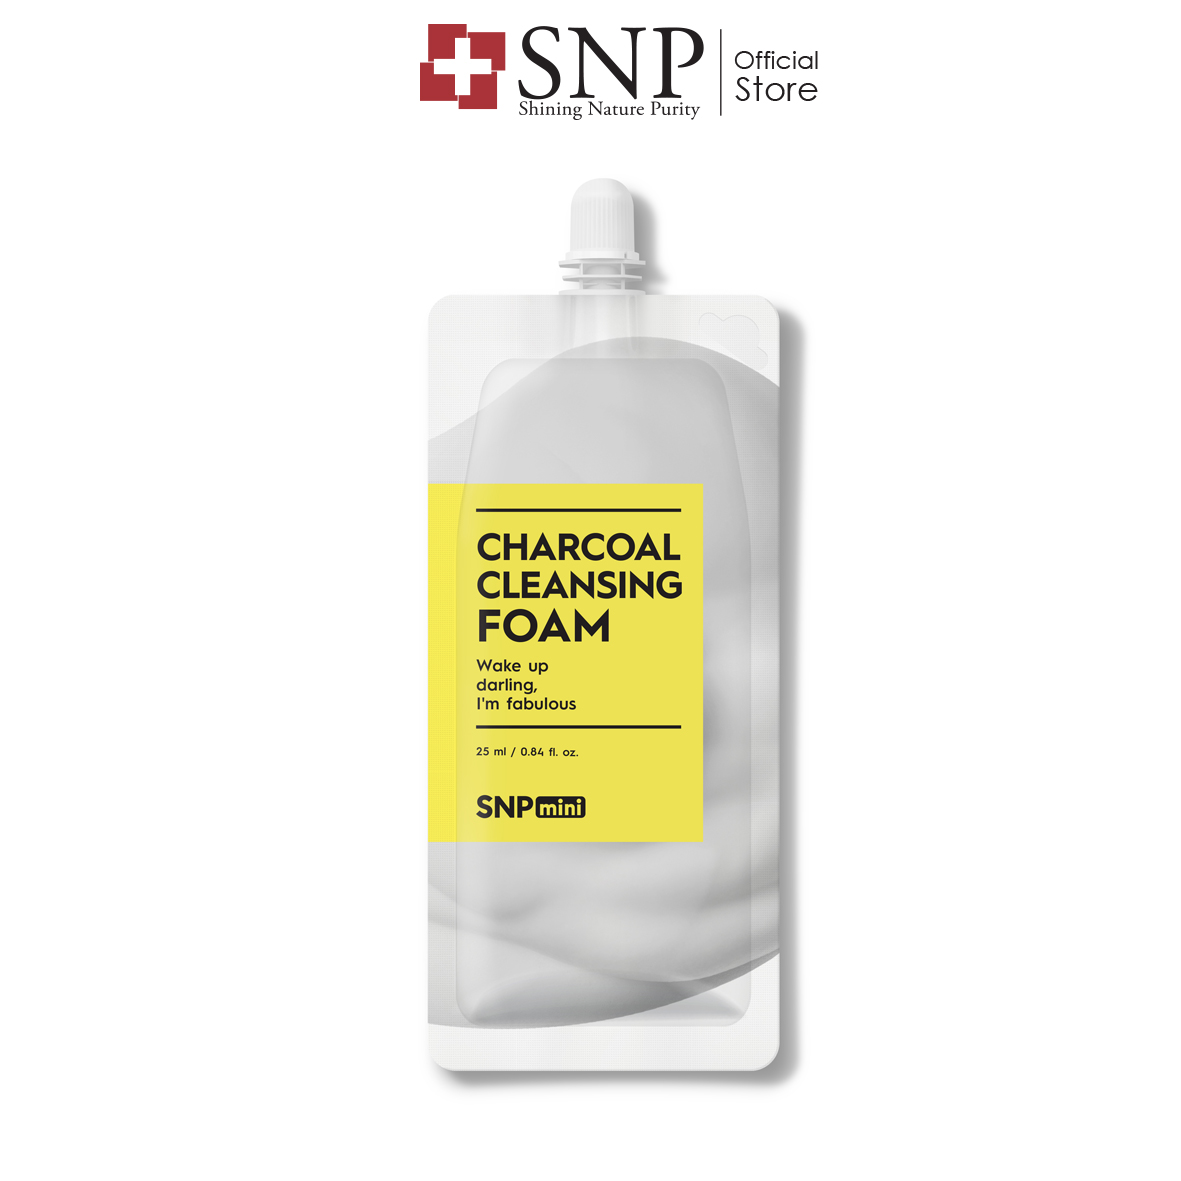 SNP Mini Charcoal Cleansing Foam (25ml)